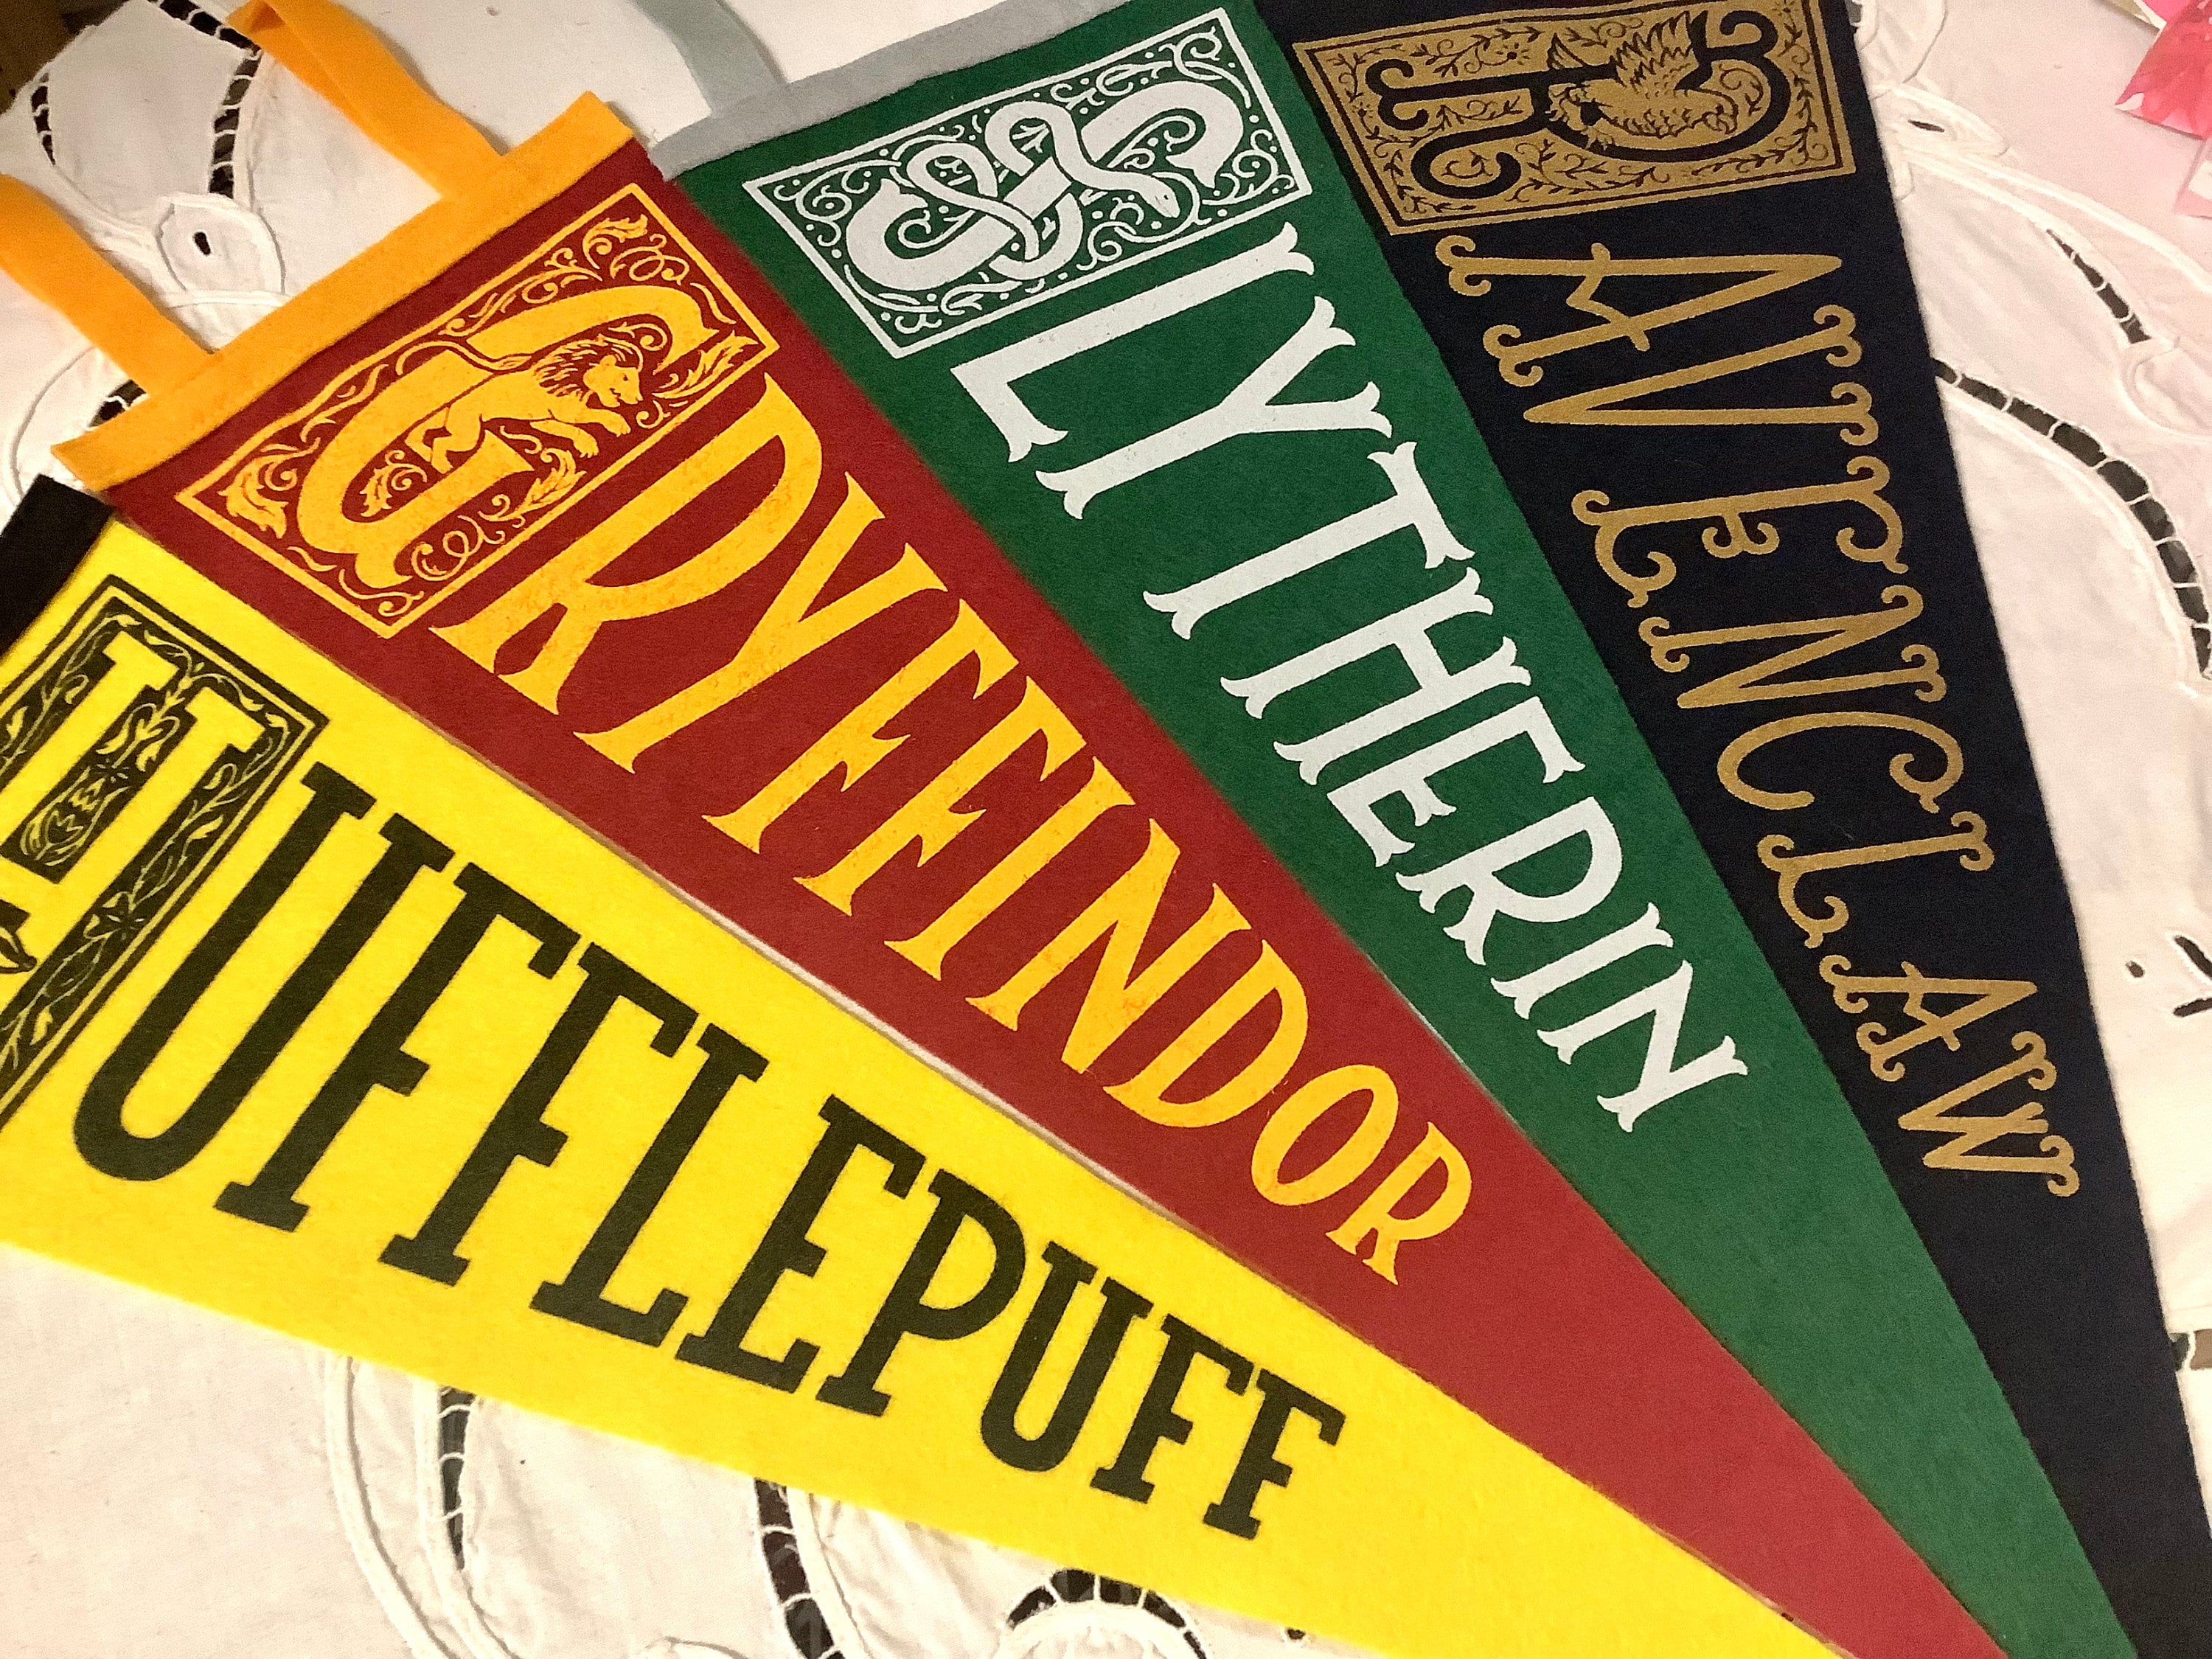 Harry Potter Hogwarts School SET Banner & Flag Pennant